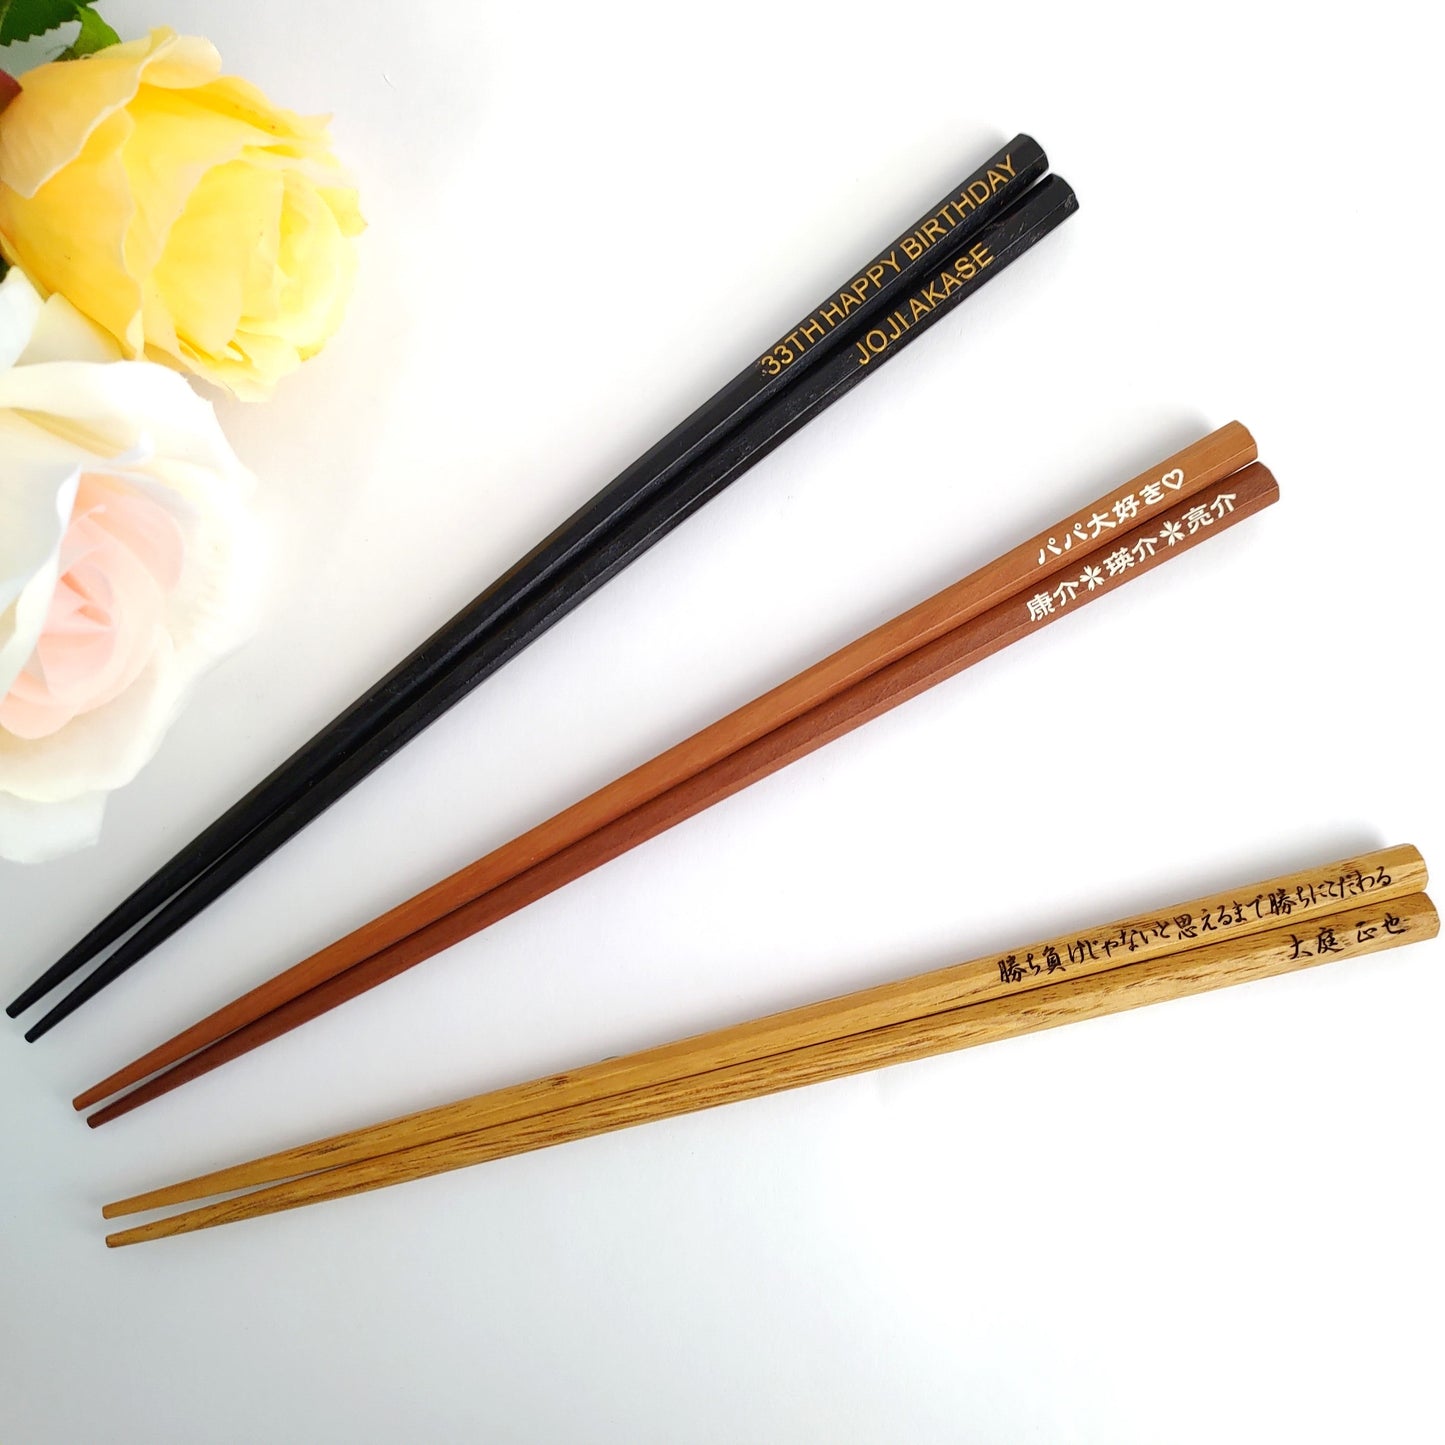 Octagonal Japanese chopsticks black brown natural - SINGLE PAIR